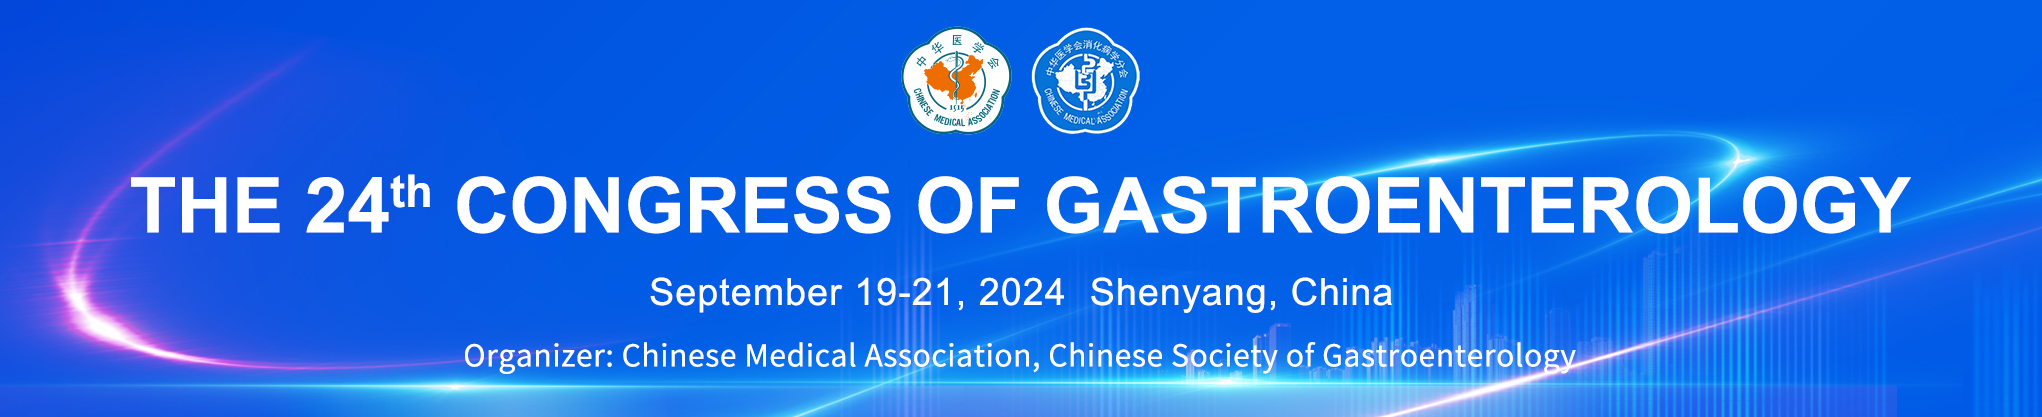 The 24th Congress of Gastroenterology